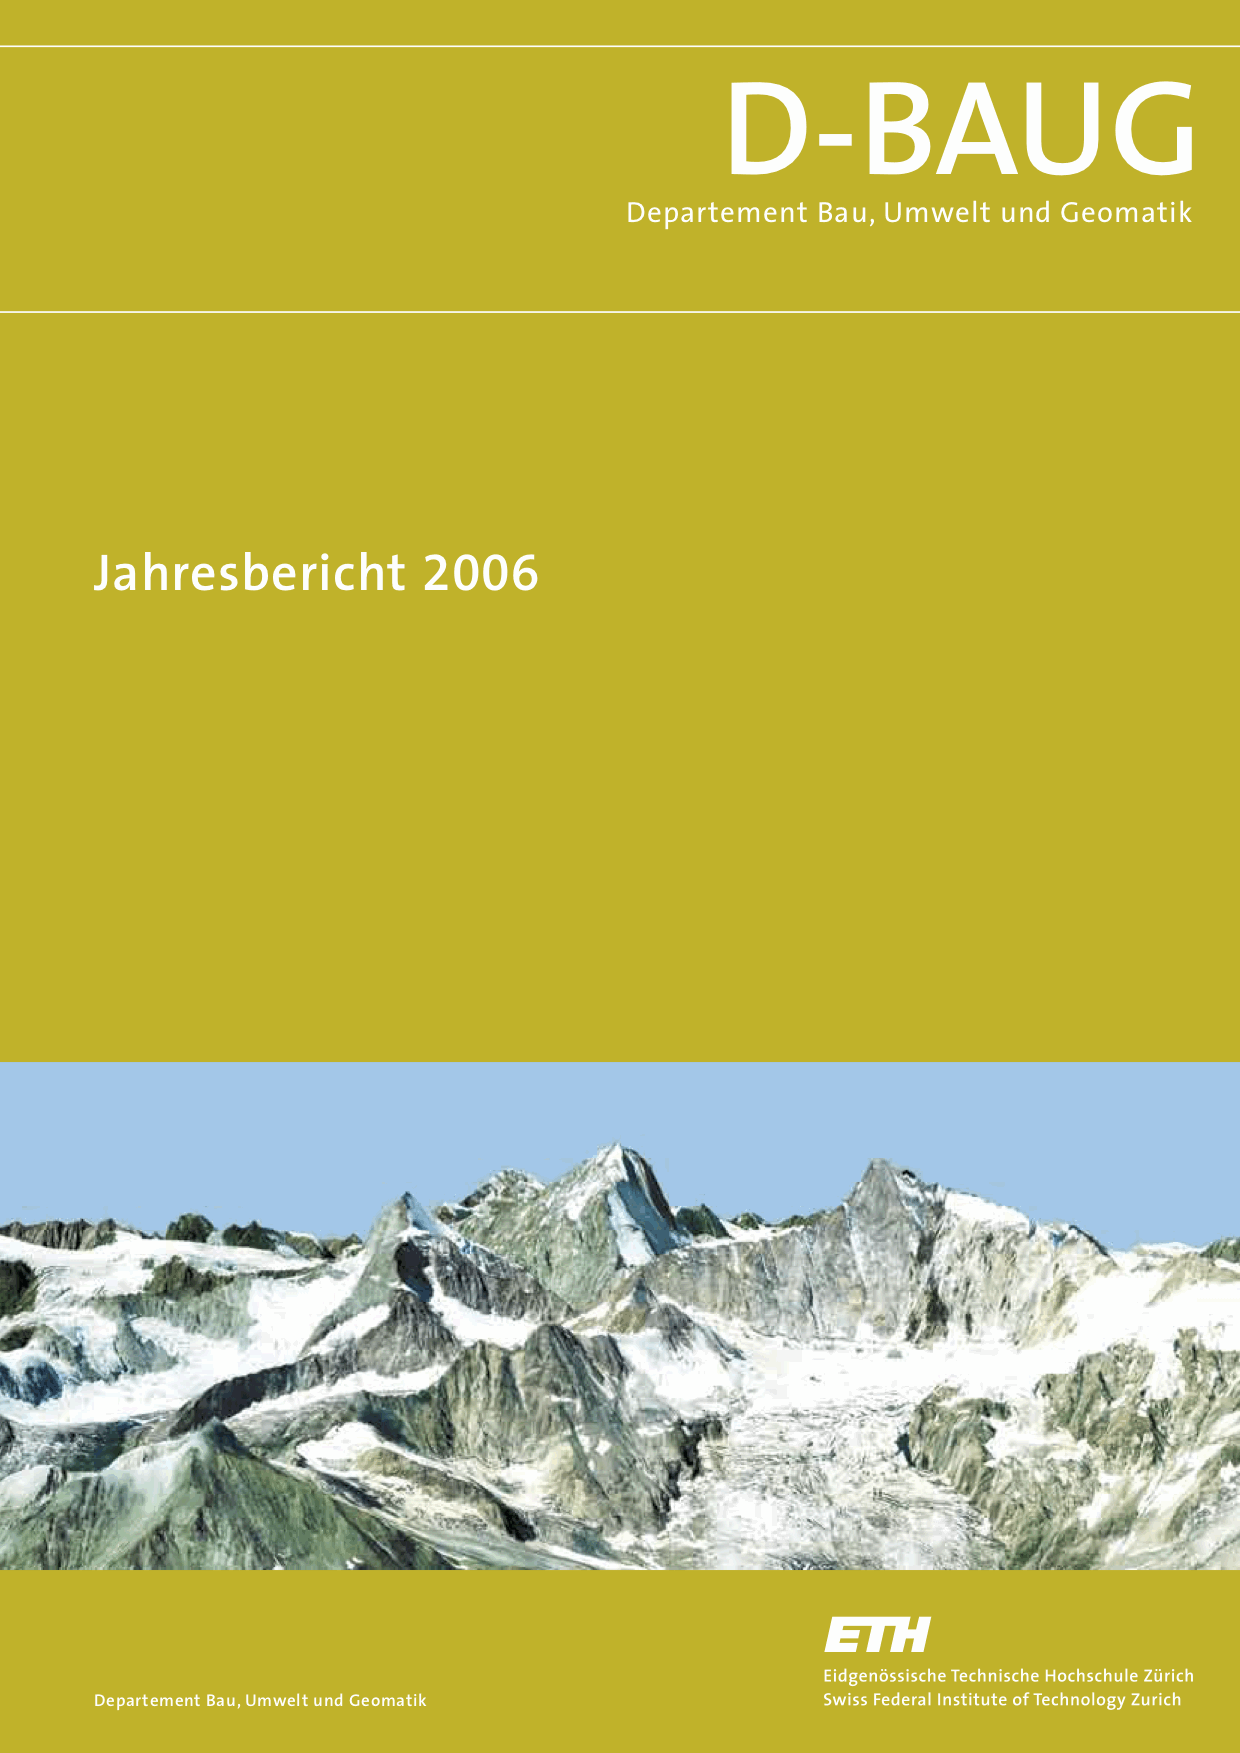 D-BAUG Jahresbericht 2006